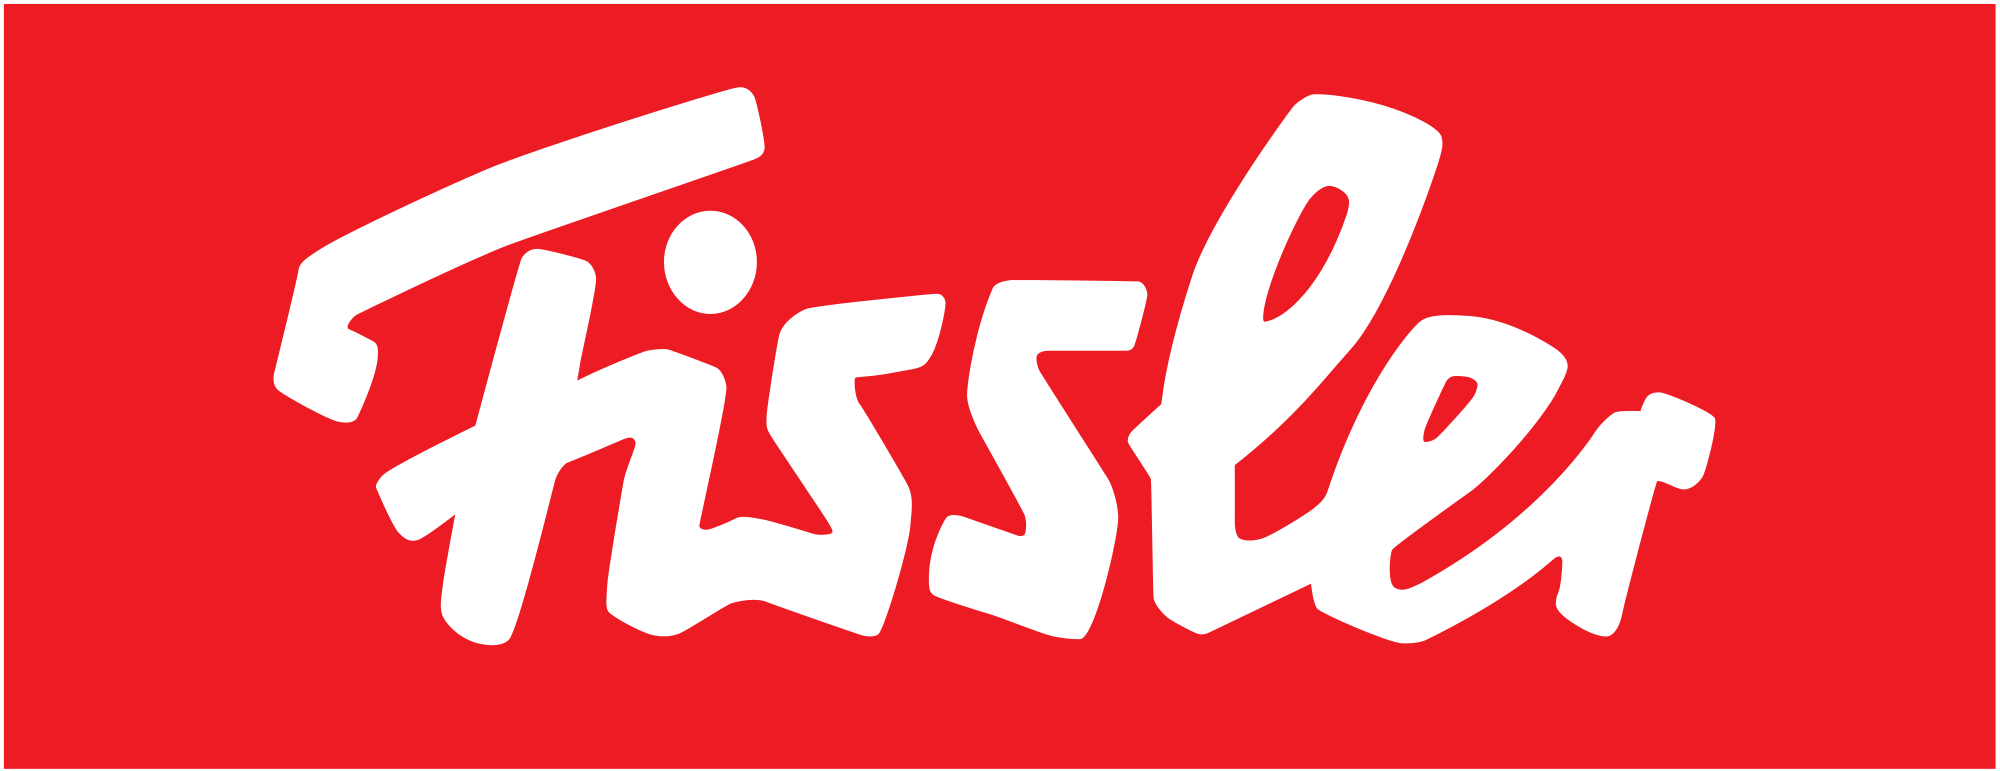 Fissler logo